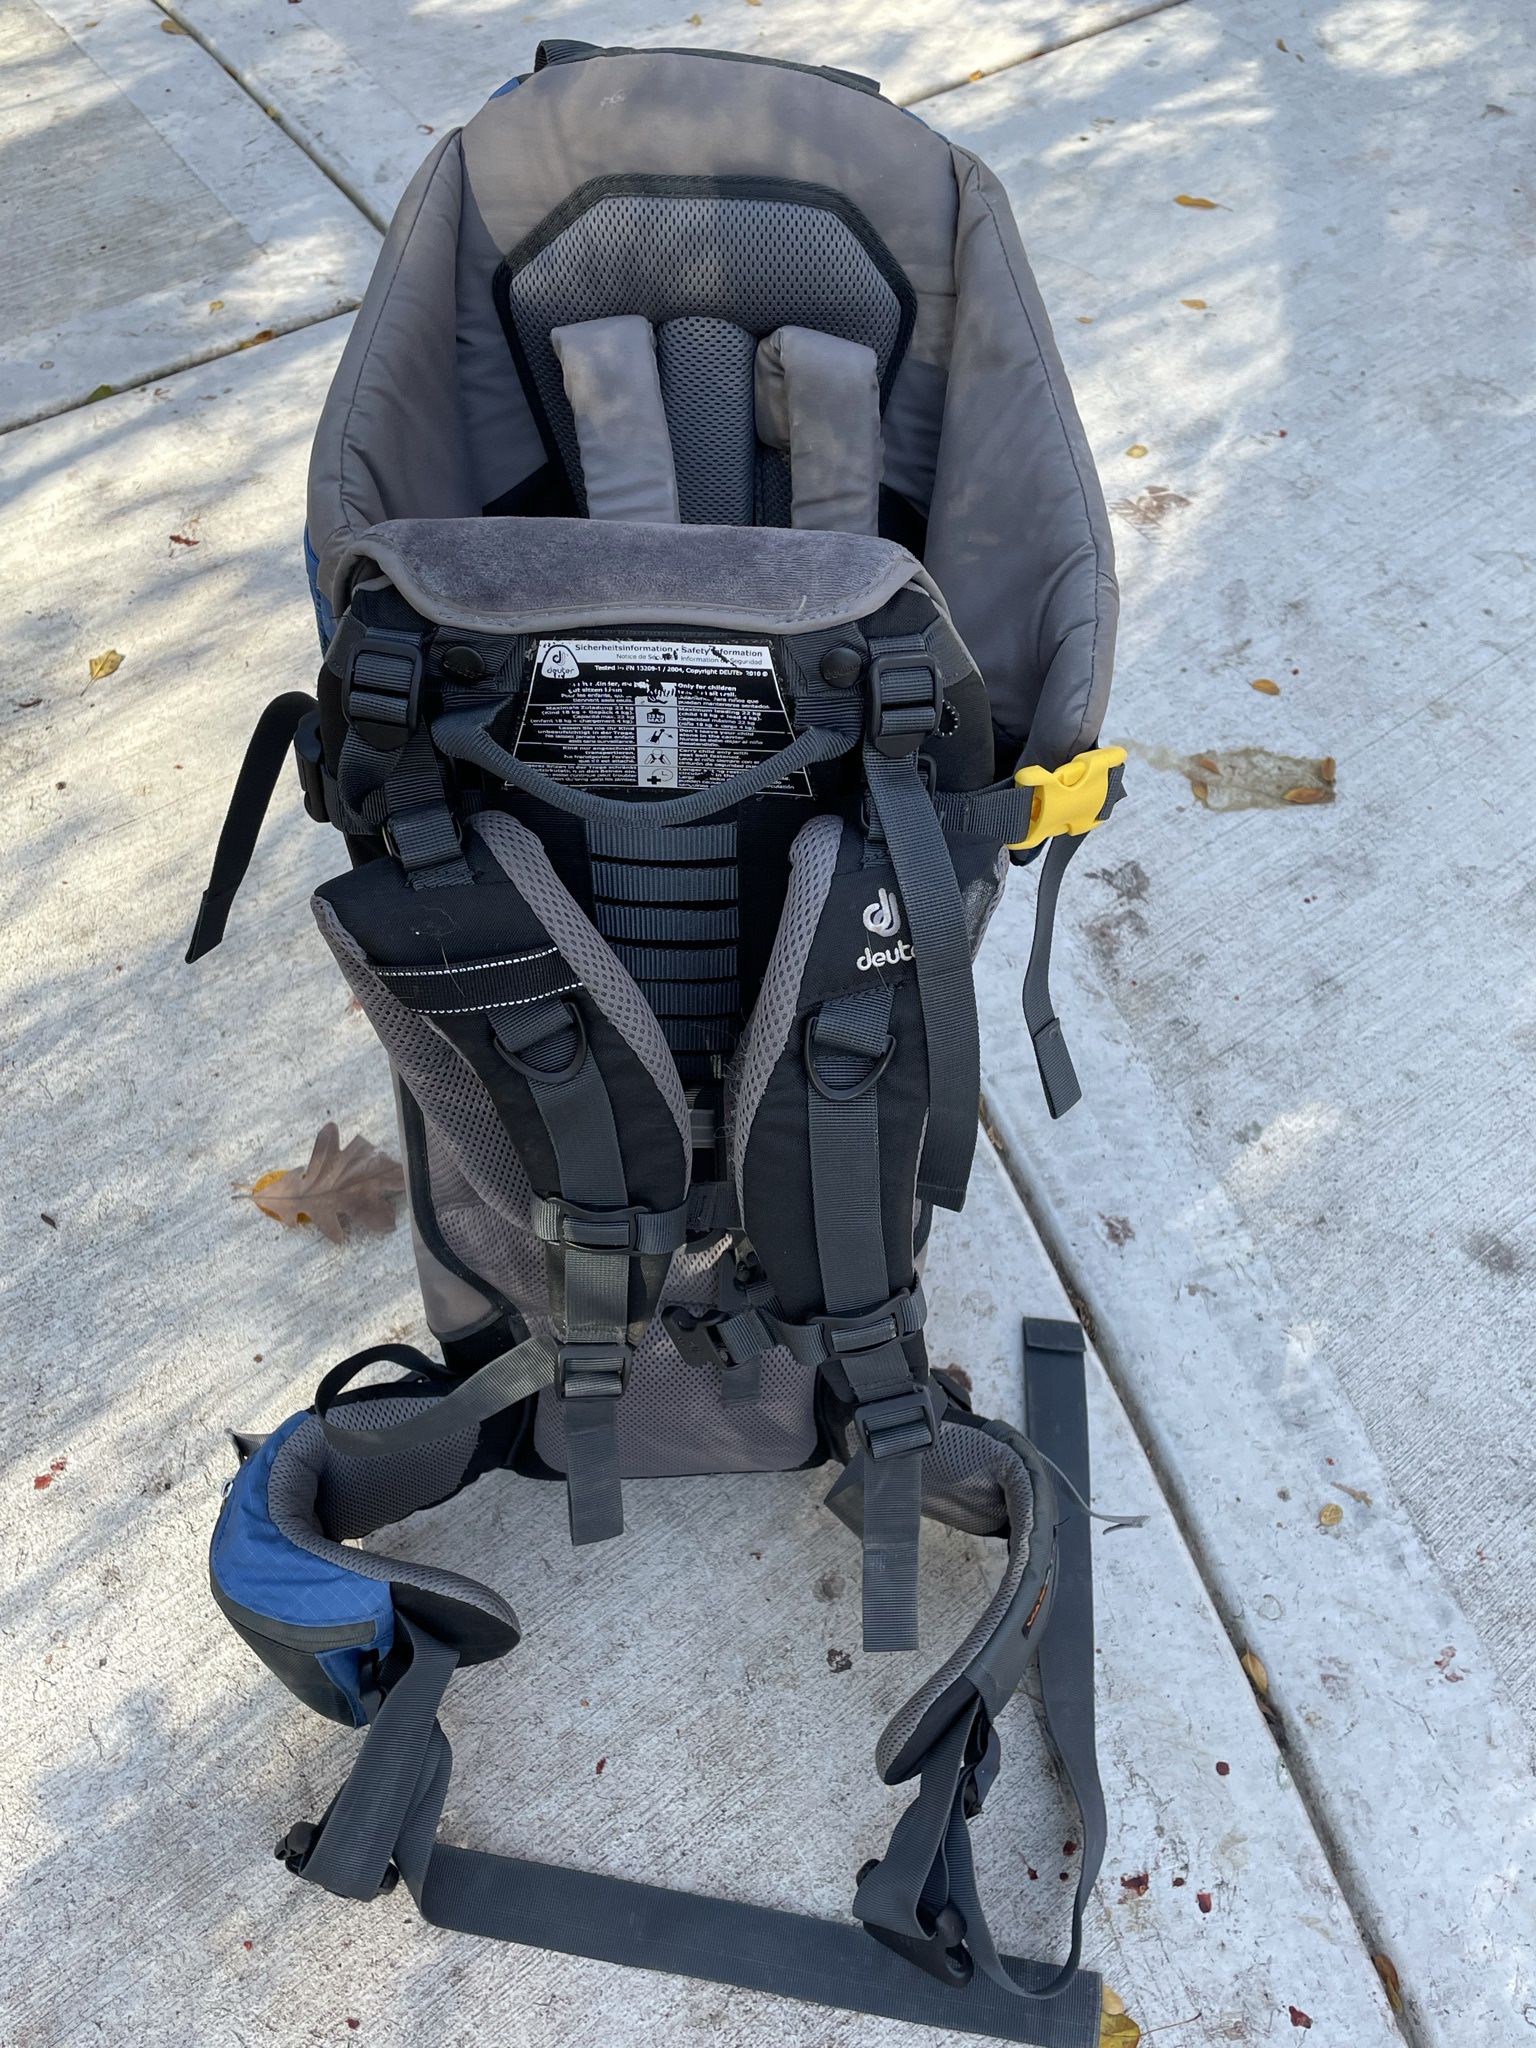 Kid carrier hiking backpack